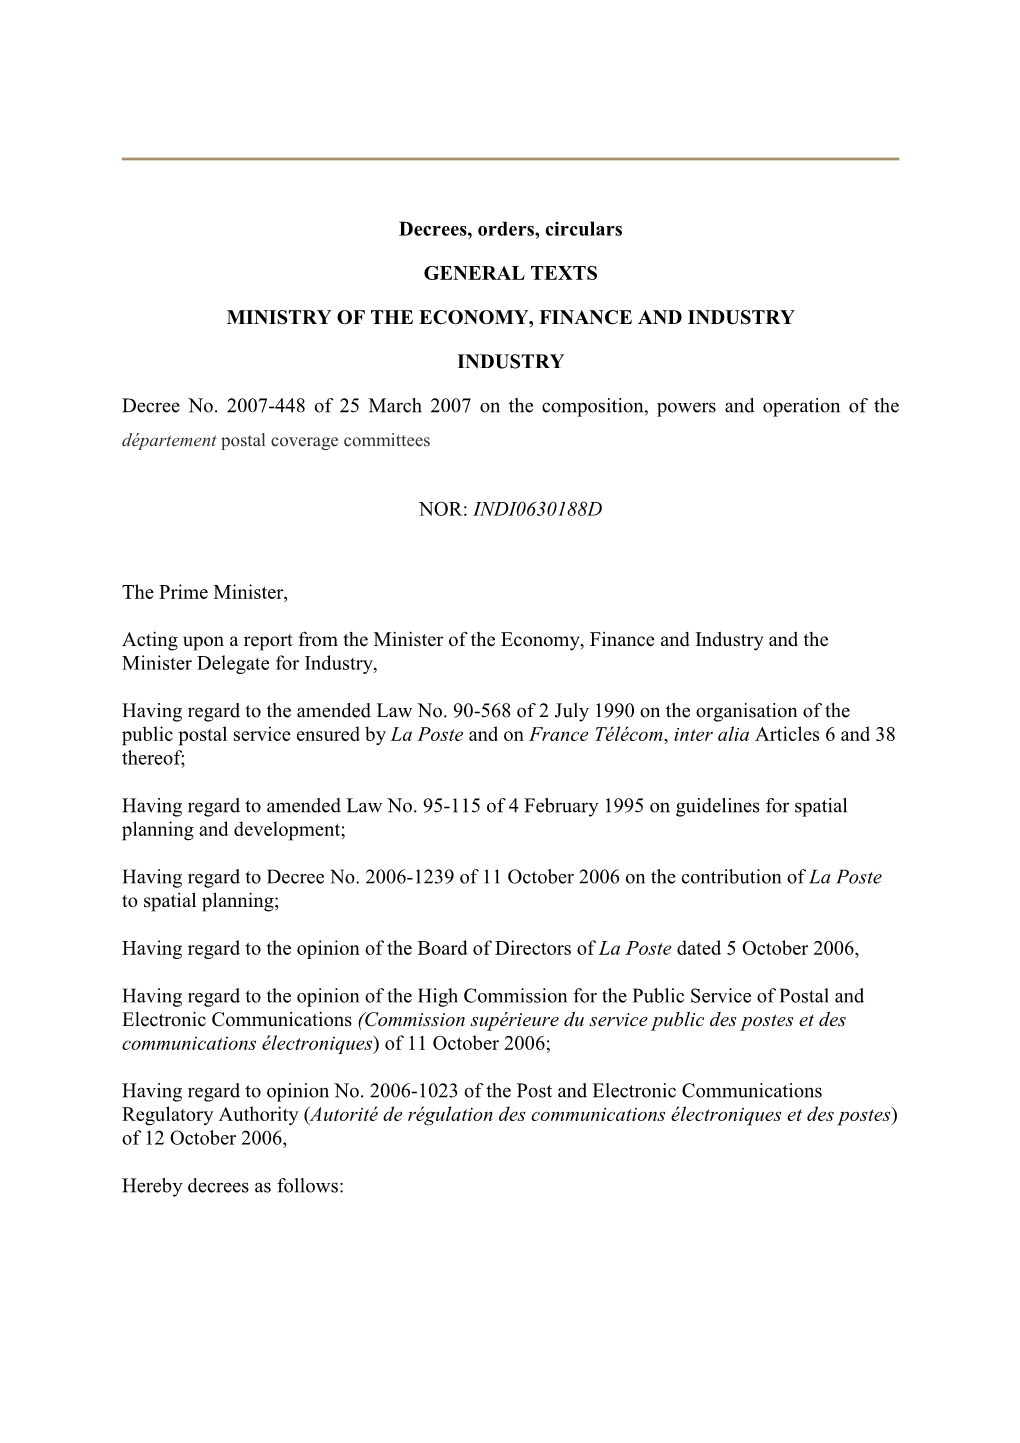 Decree N° 2007-448 of 25 March 2007